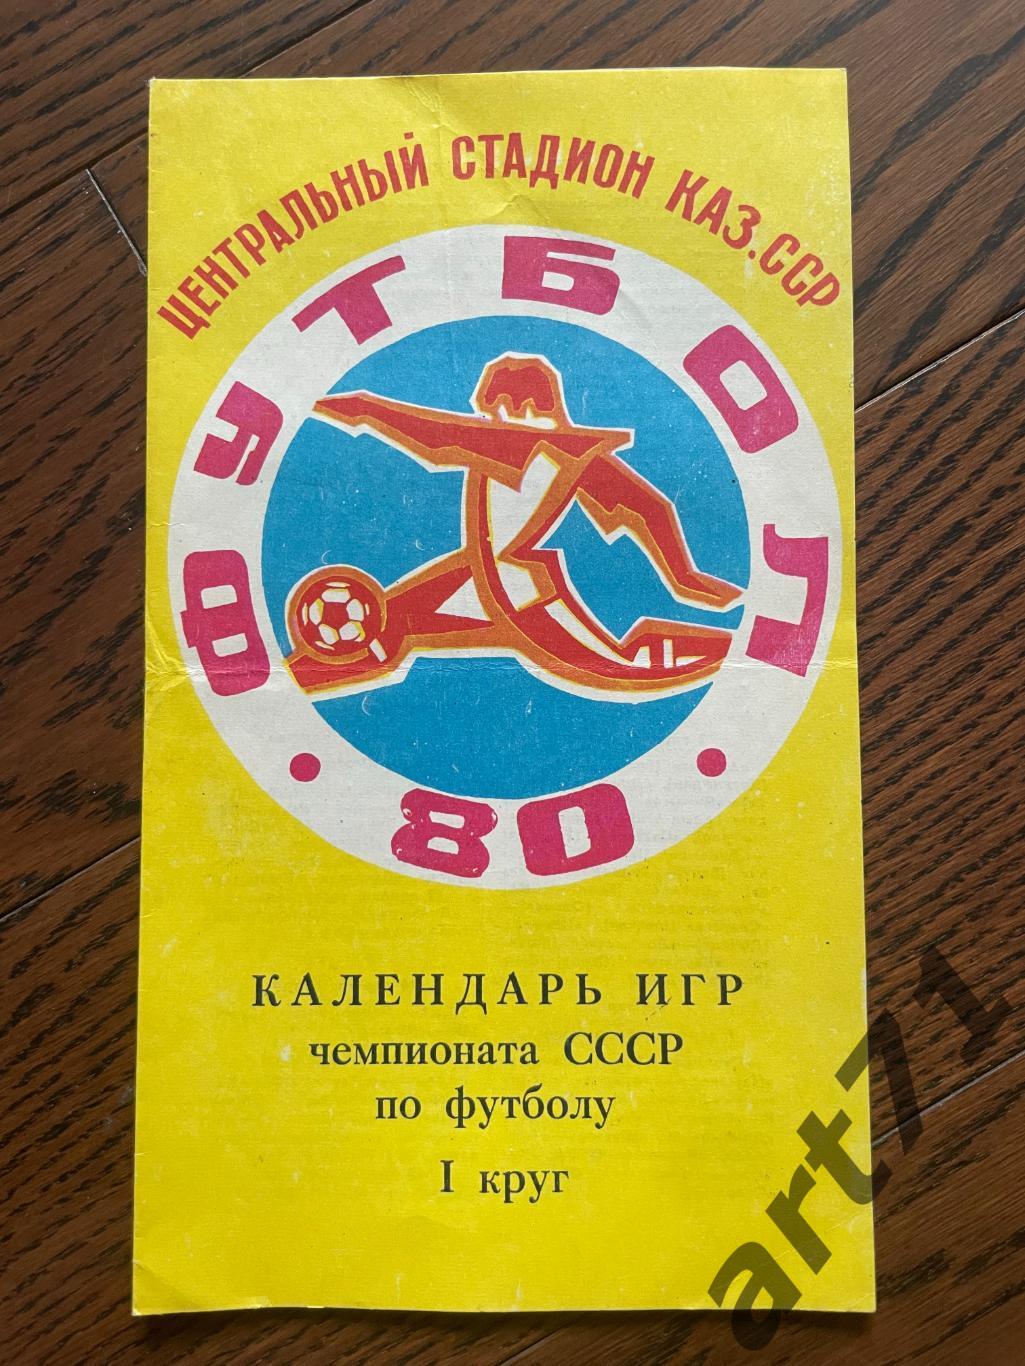 Алма-Ата 1980. Календарь игр. 1 круг